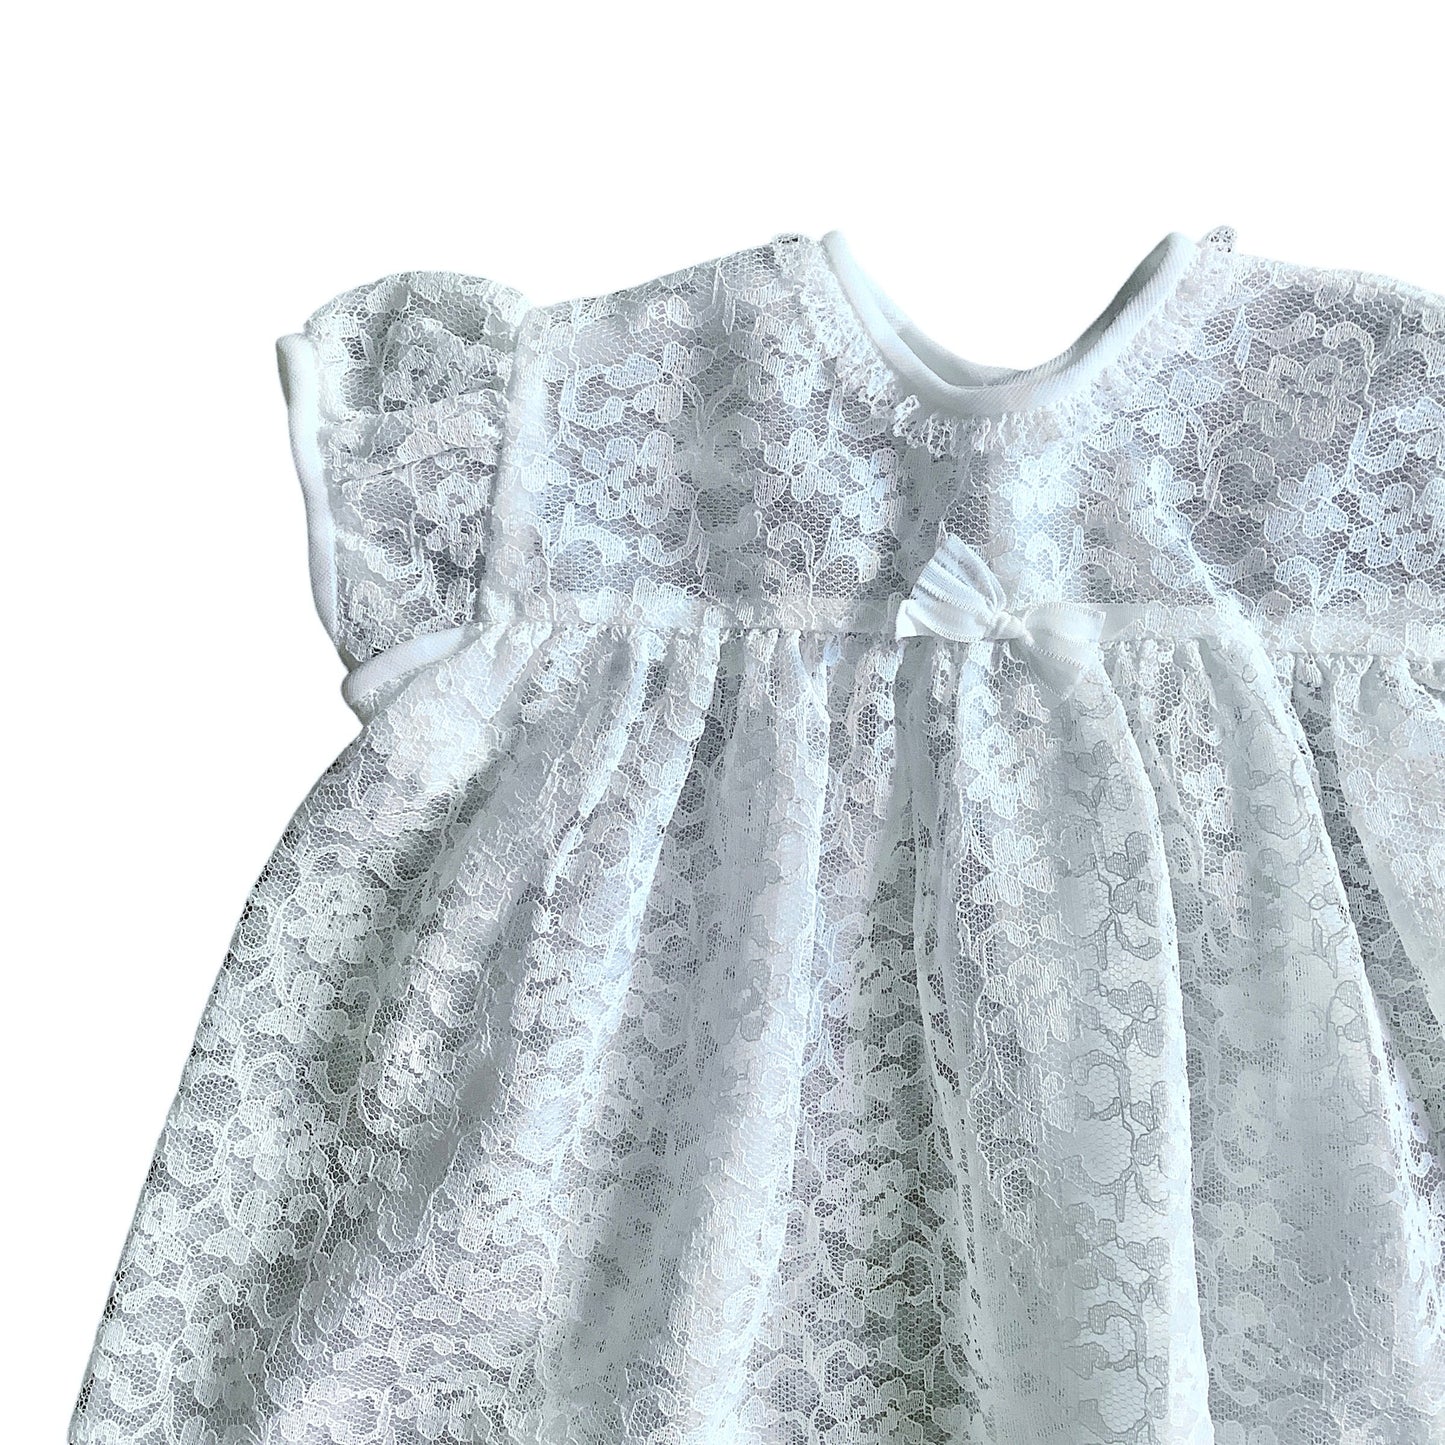 Vintage 60's White Sheer Lace Dress 9-12M